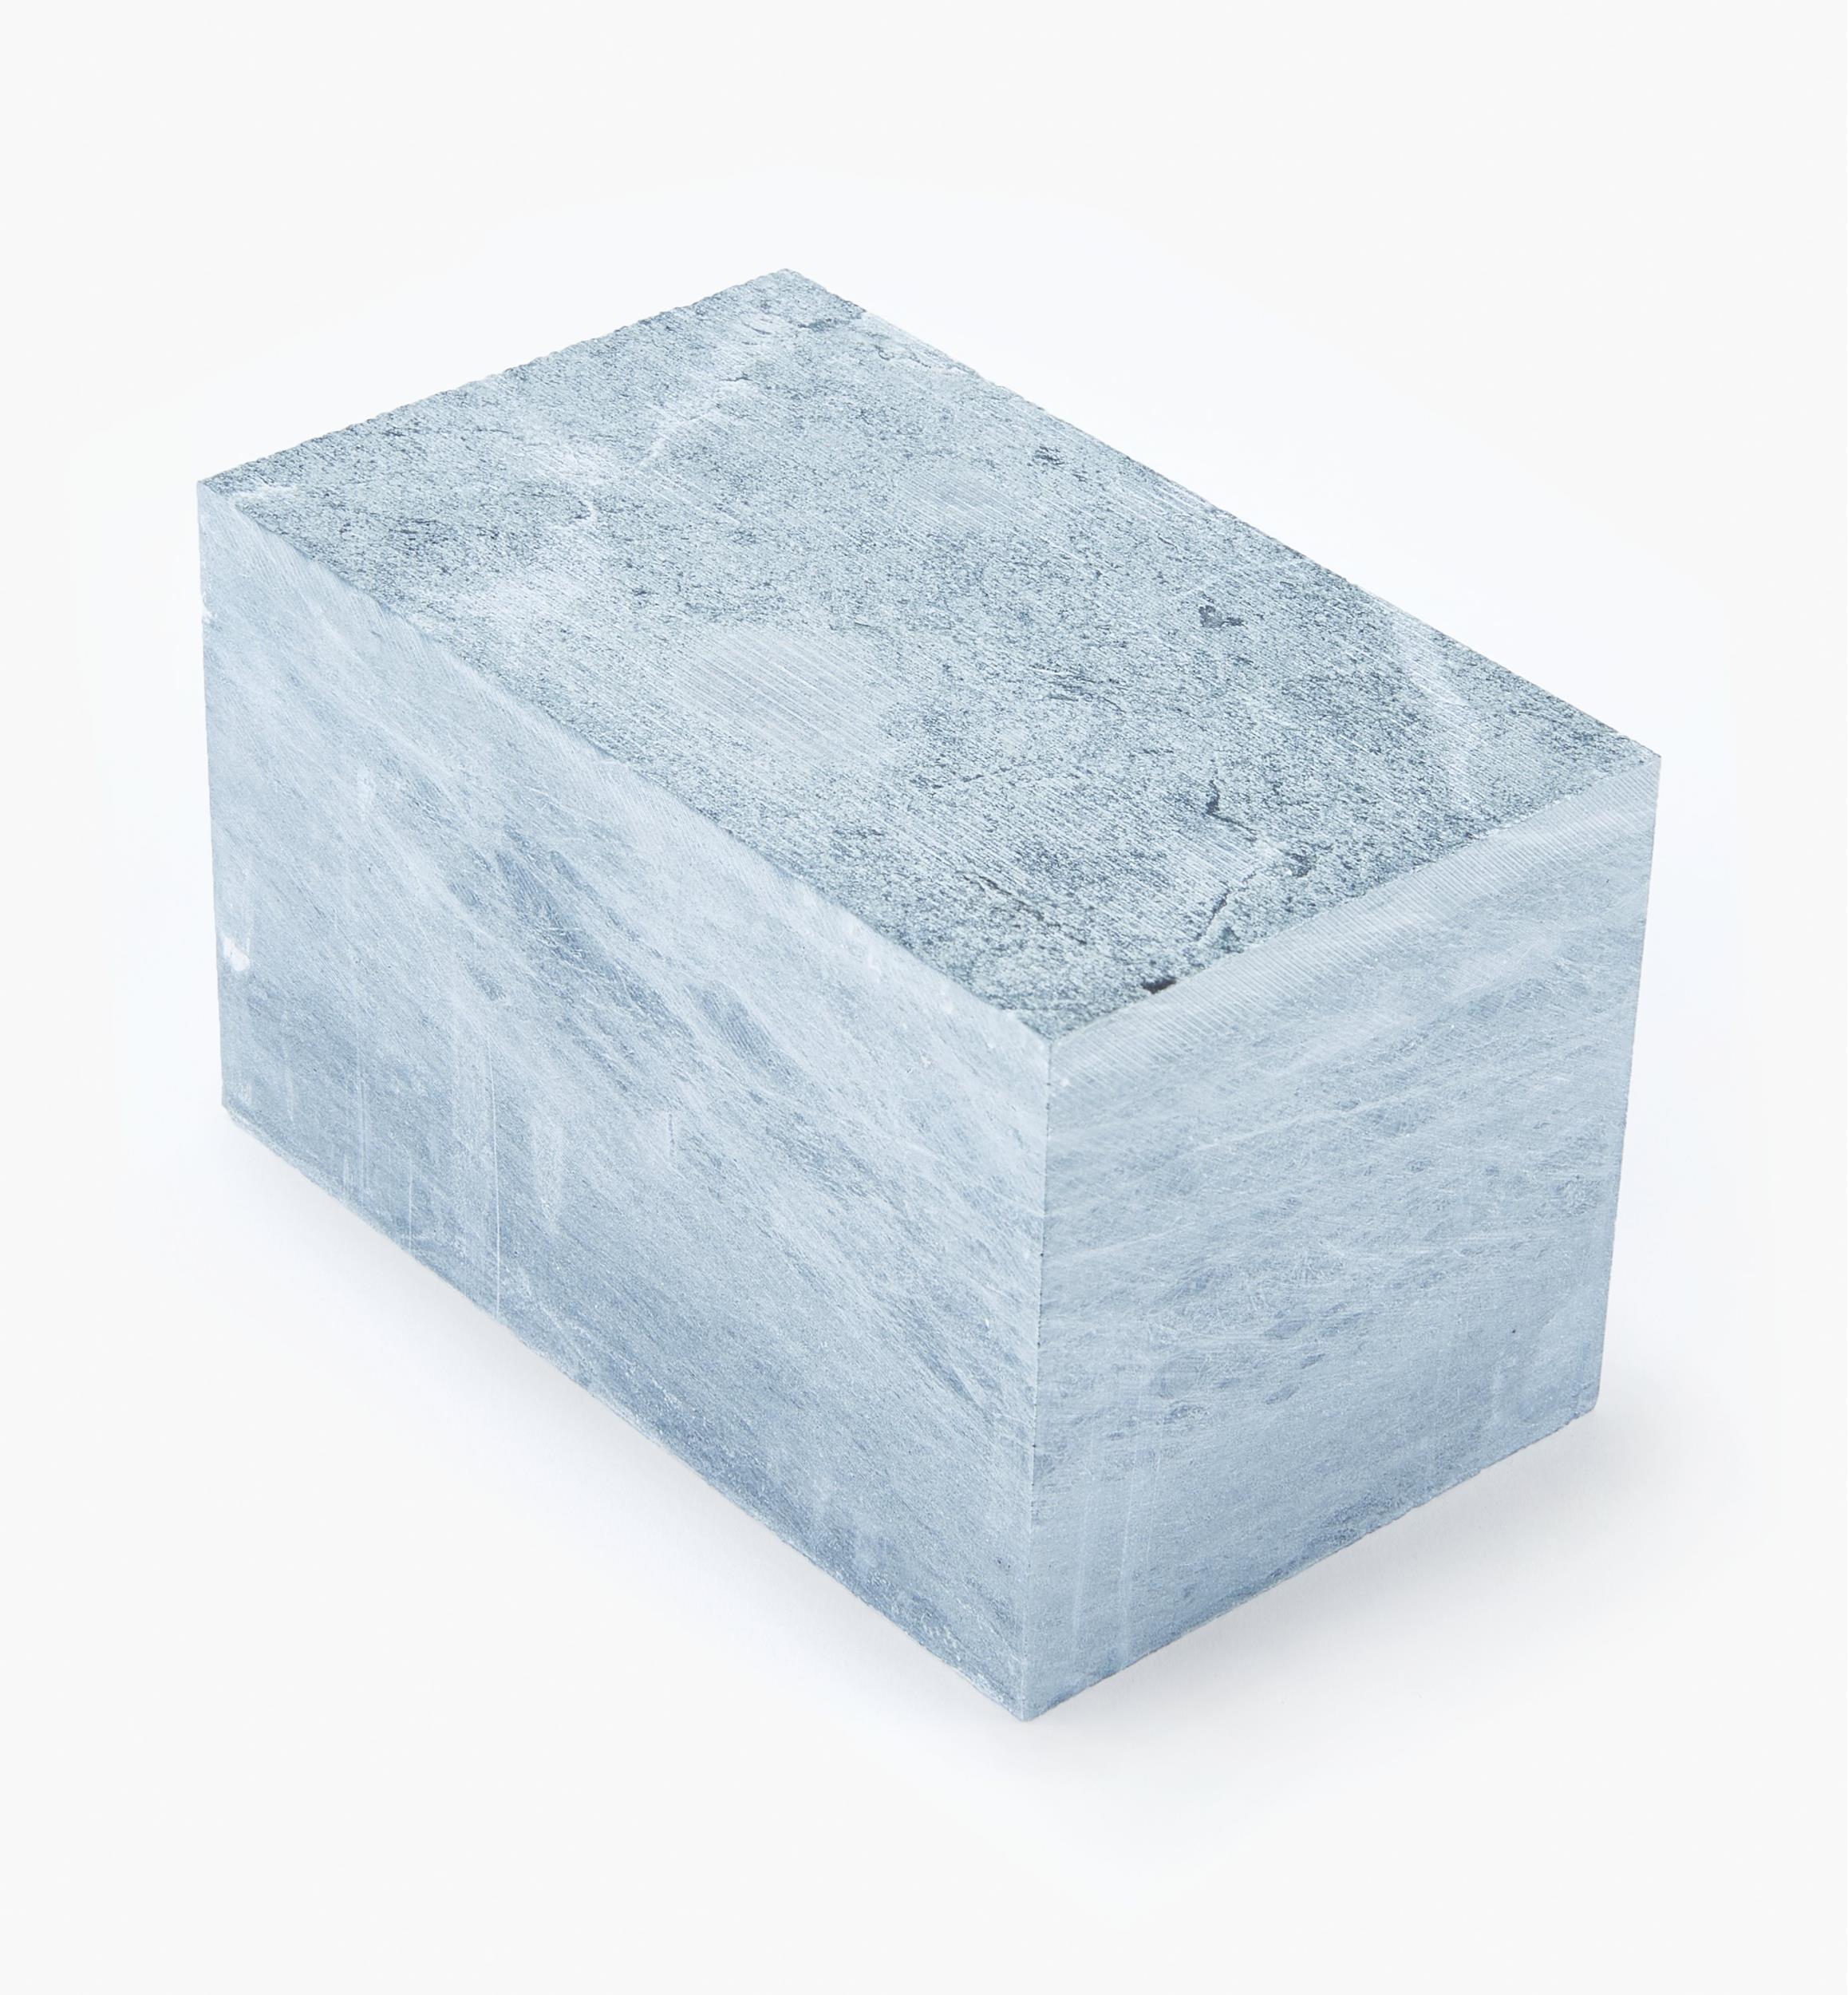 5" x 4" x 1" minimum size Large Alberene Soapstone Block For Carving 